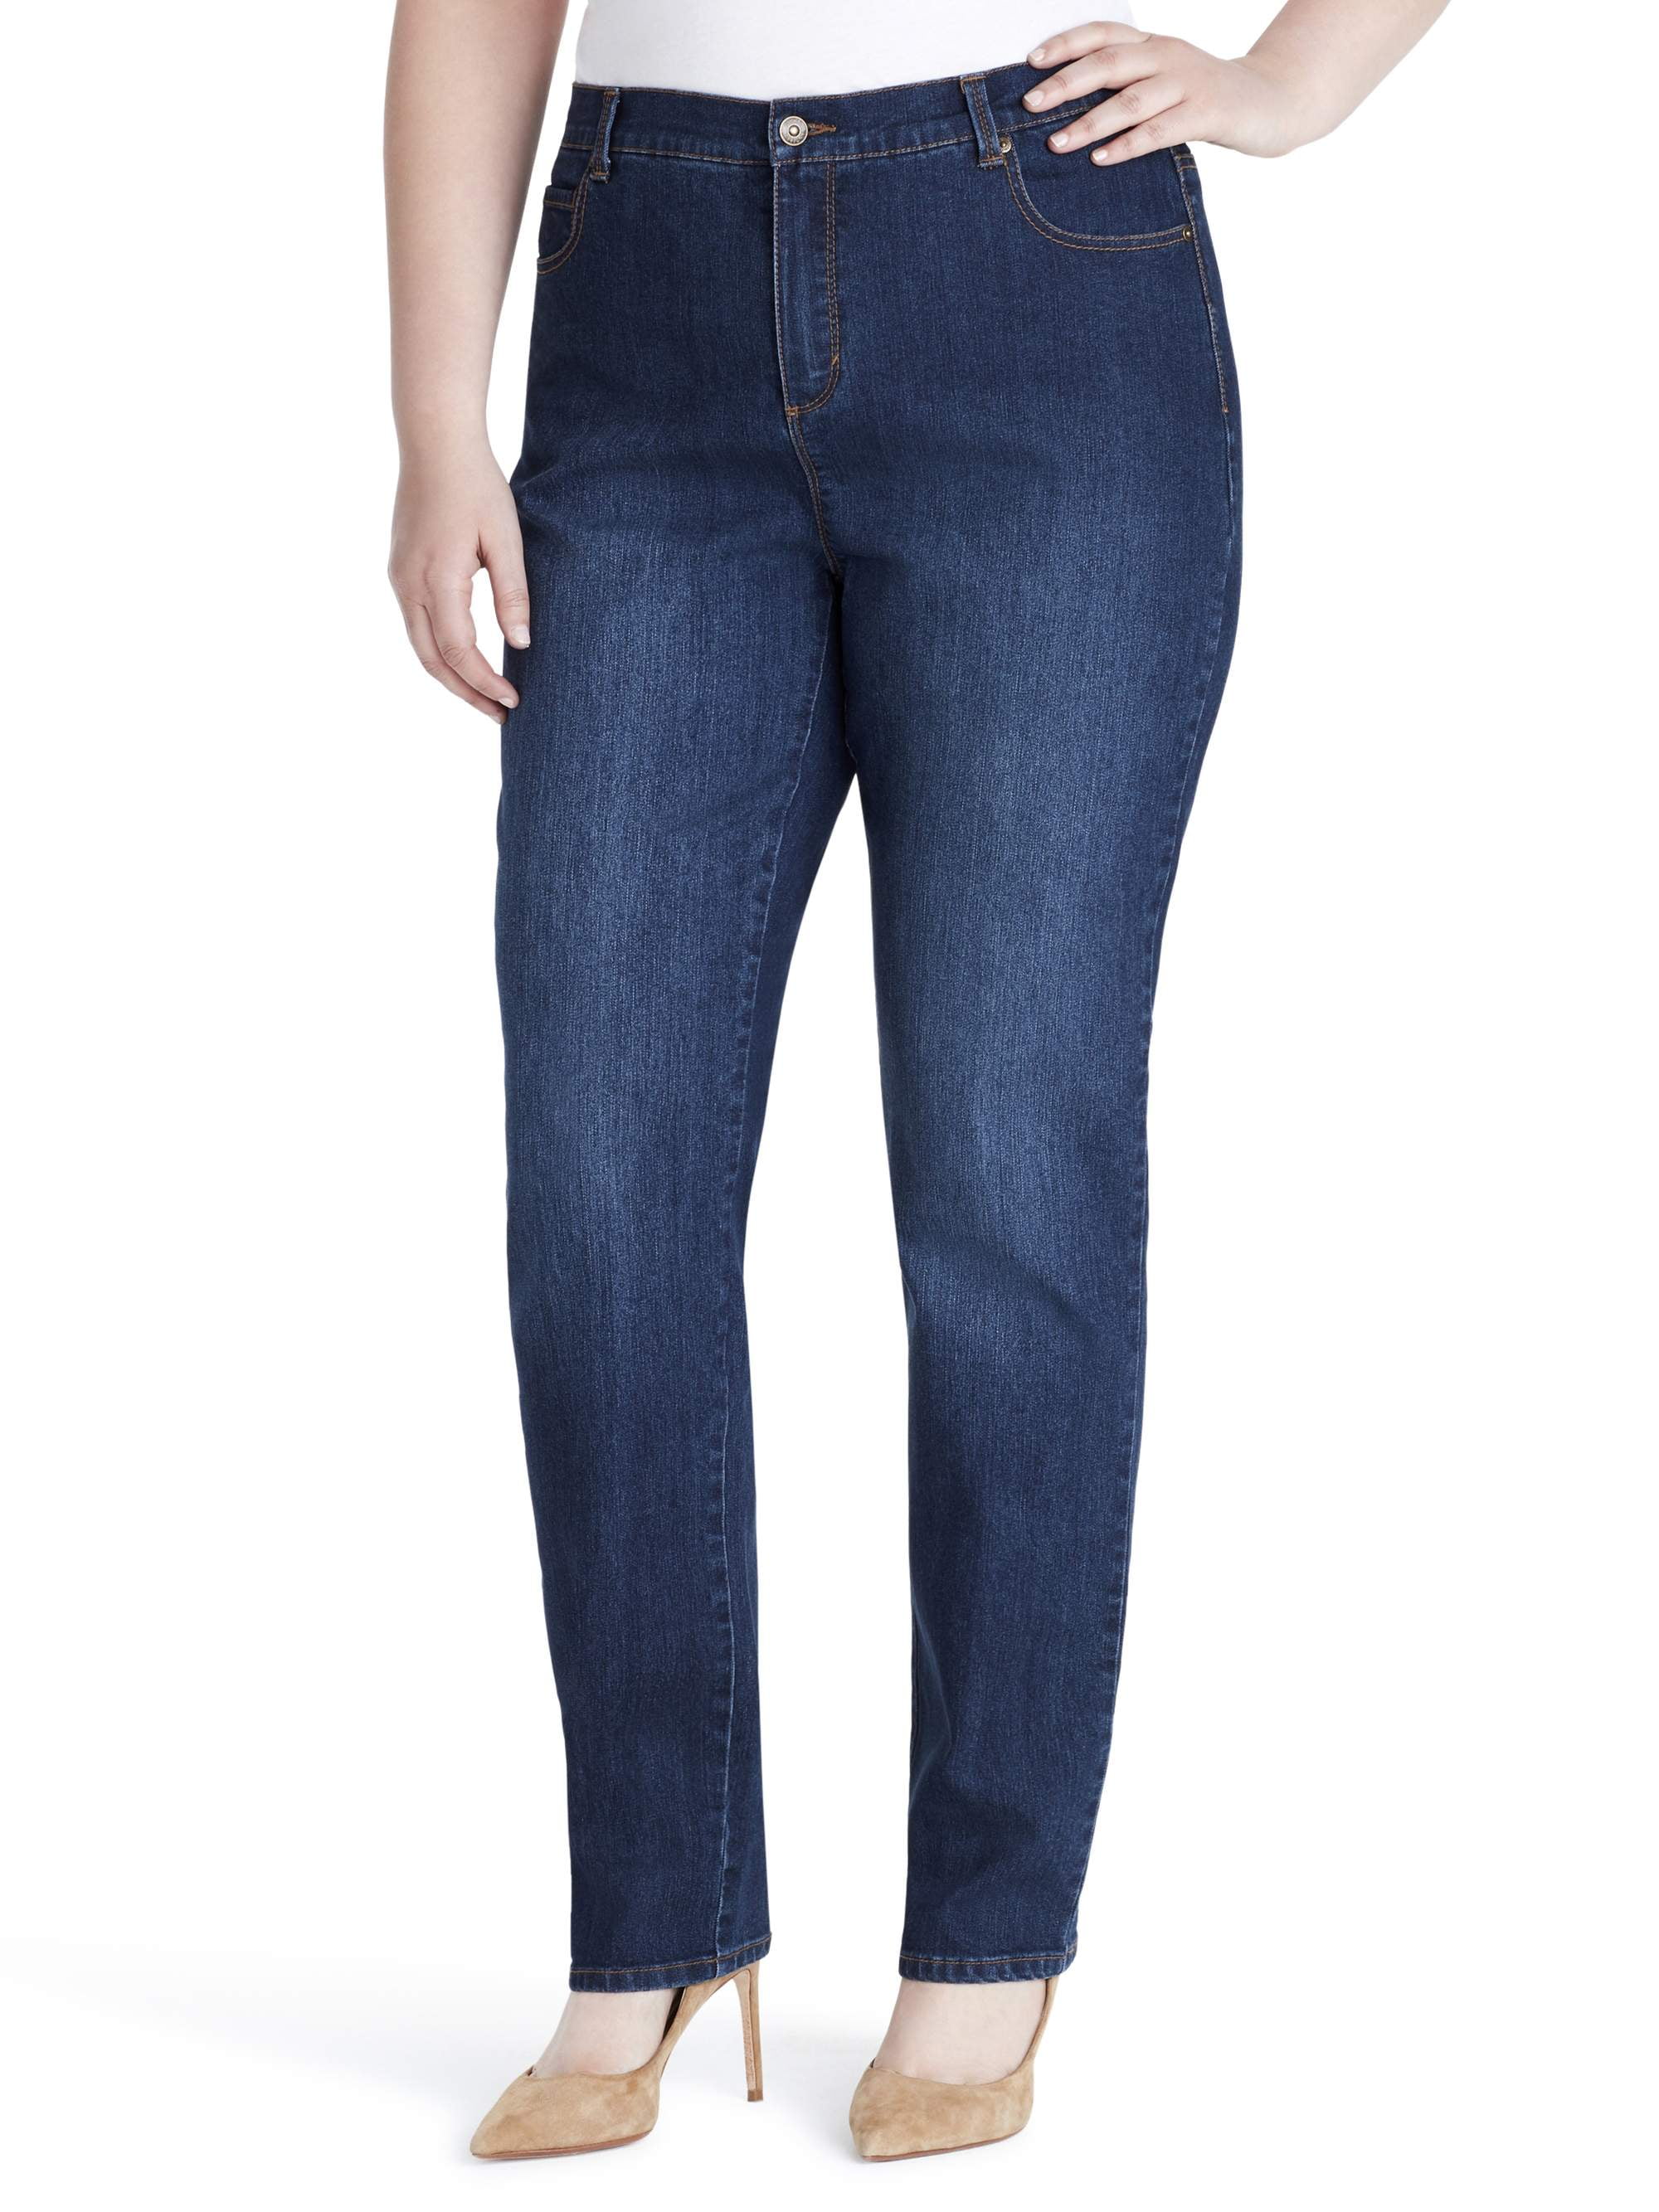 Select Size Gloria Vanderbilt Ladies' Amanda Denim Jeans DARK BLUE PORTLAND 